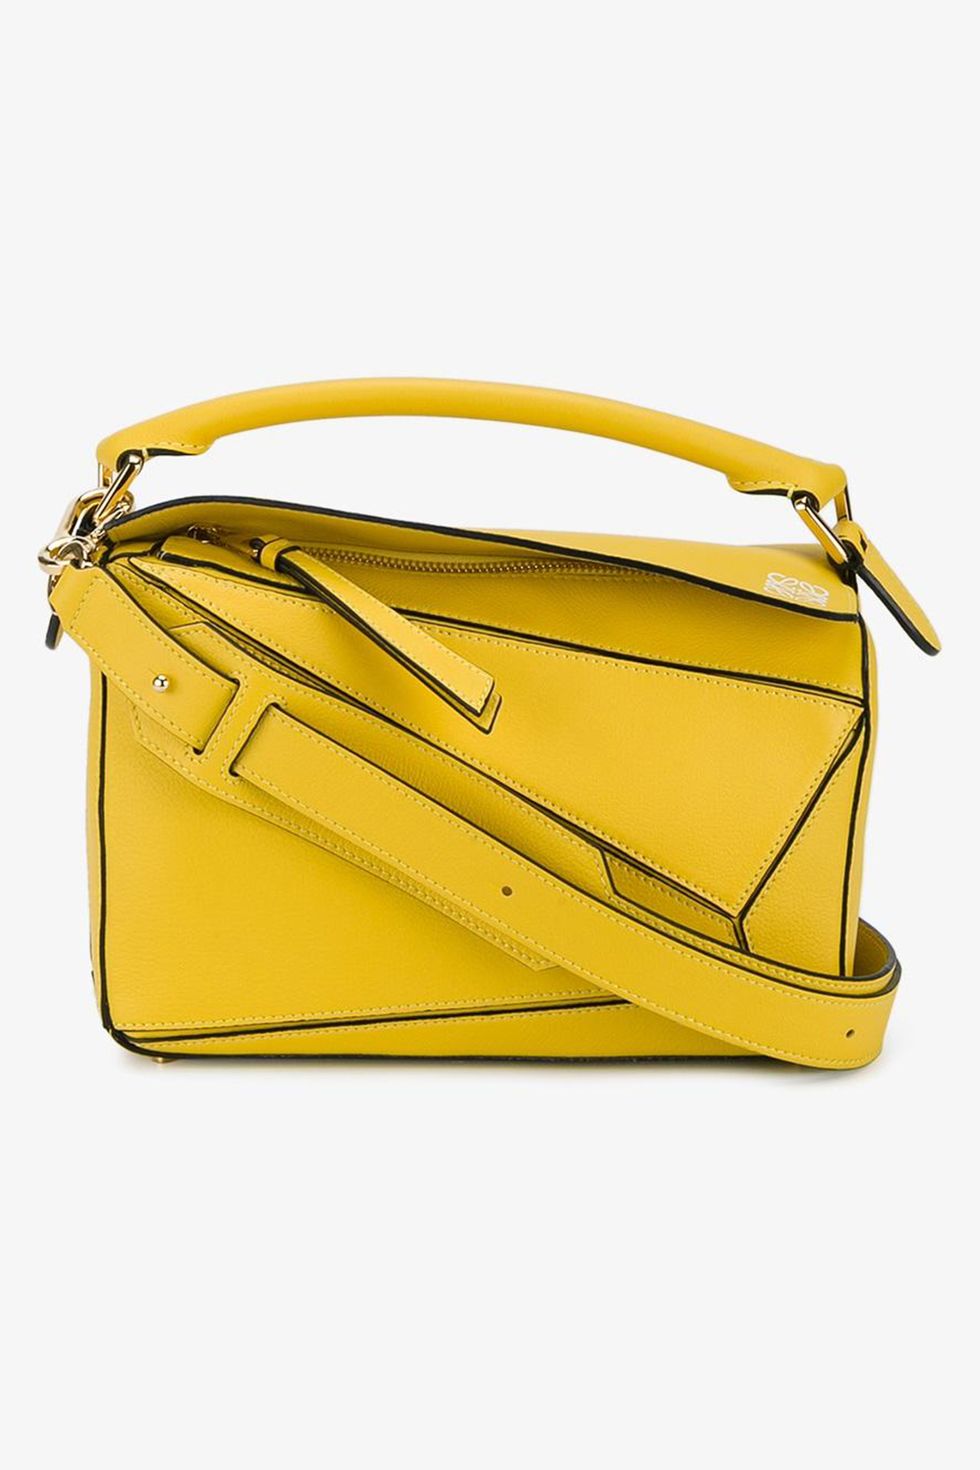 Bag, Handbag, Yellow, Fashion accessory, Shoulder bag, Leather, Kelly bag, Coin purse, 